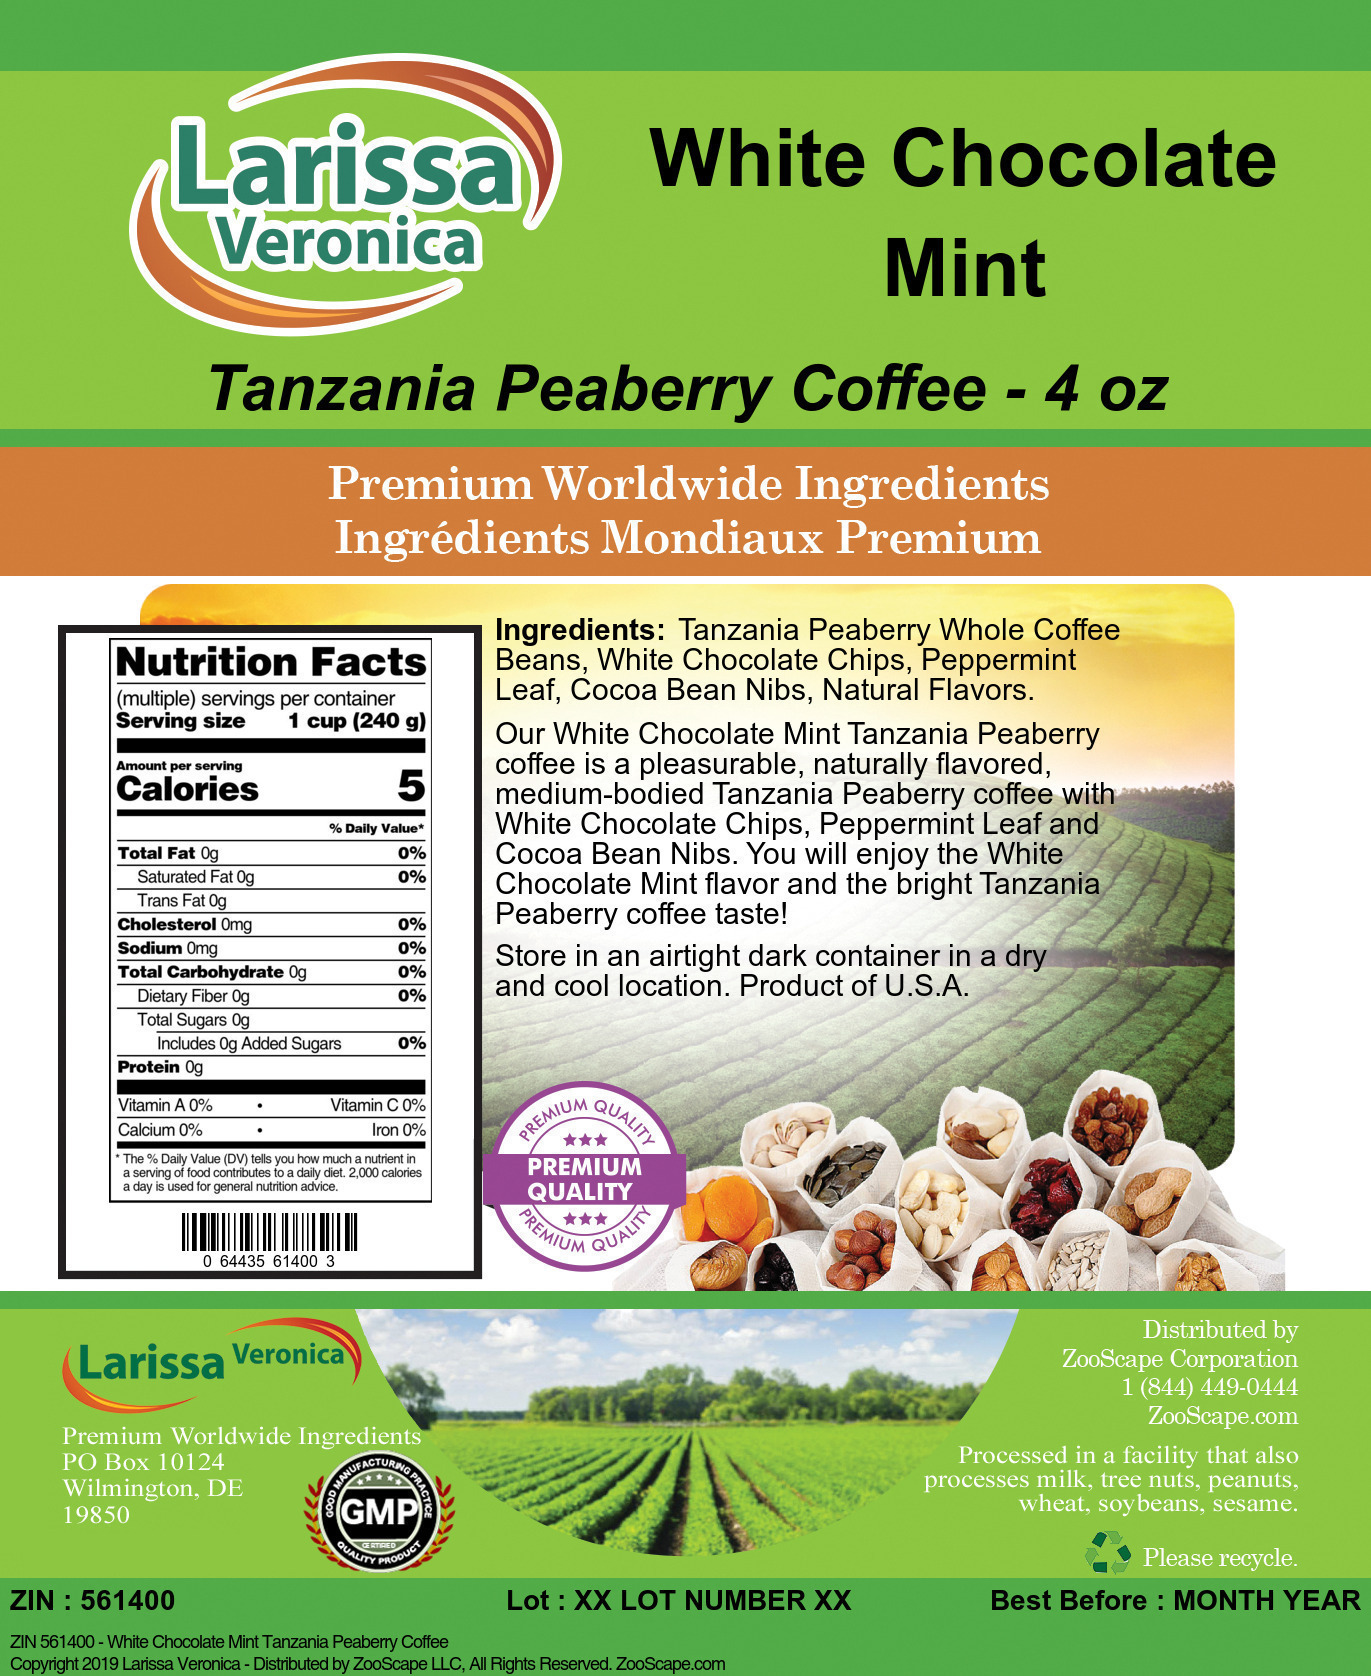 White Chocolate Mint Tanzania Peaberry Coffee - Label